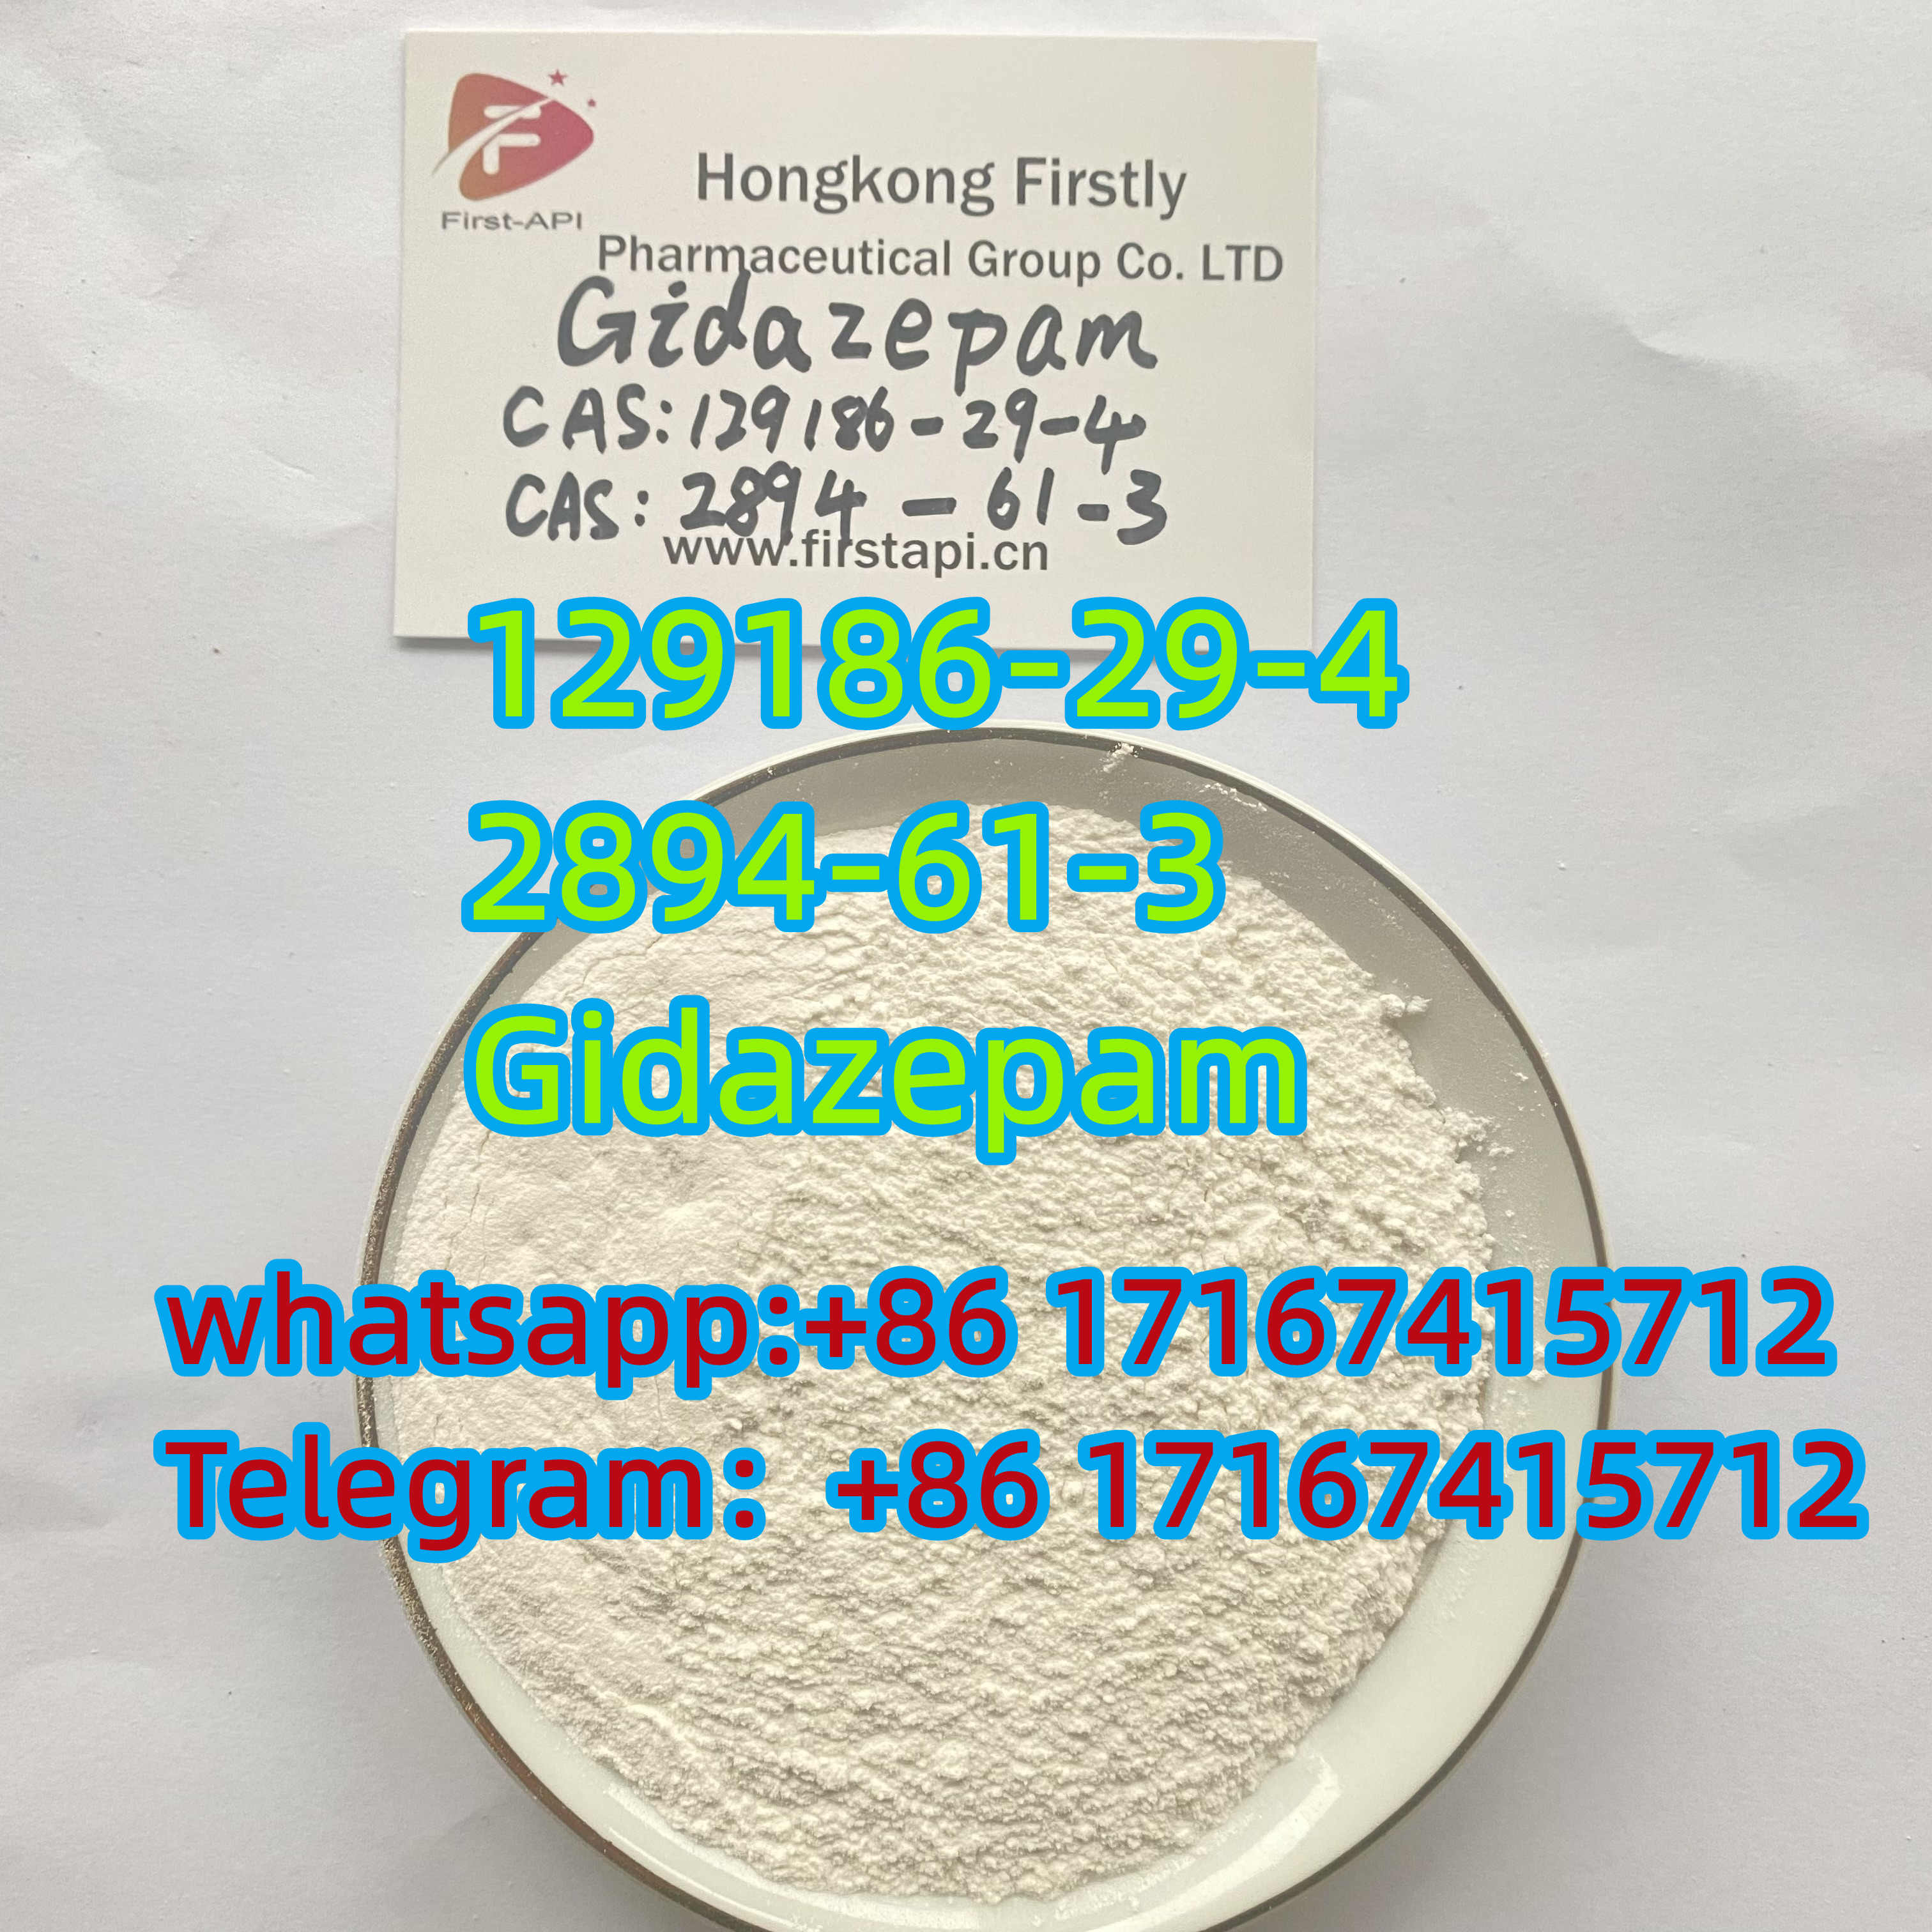 Low price 129186-29-4 2894-61-3 Gidazepam  - photo